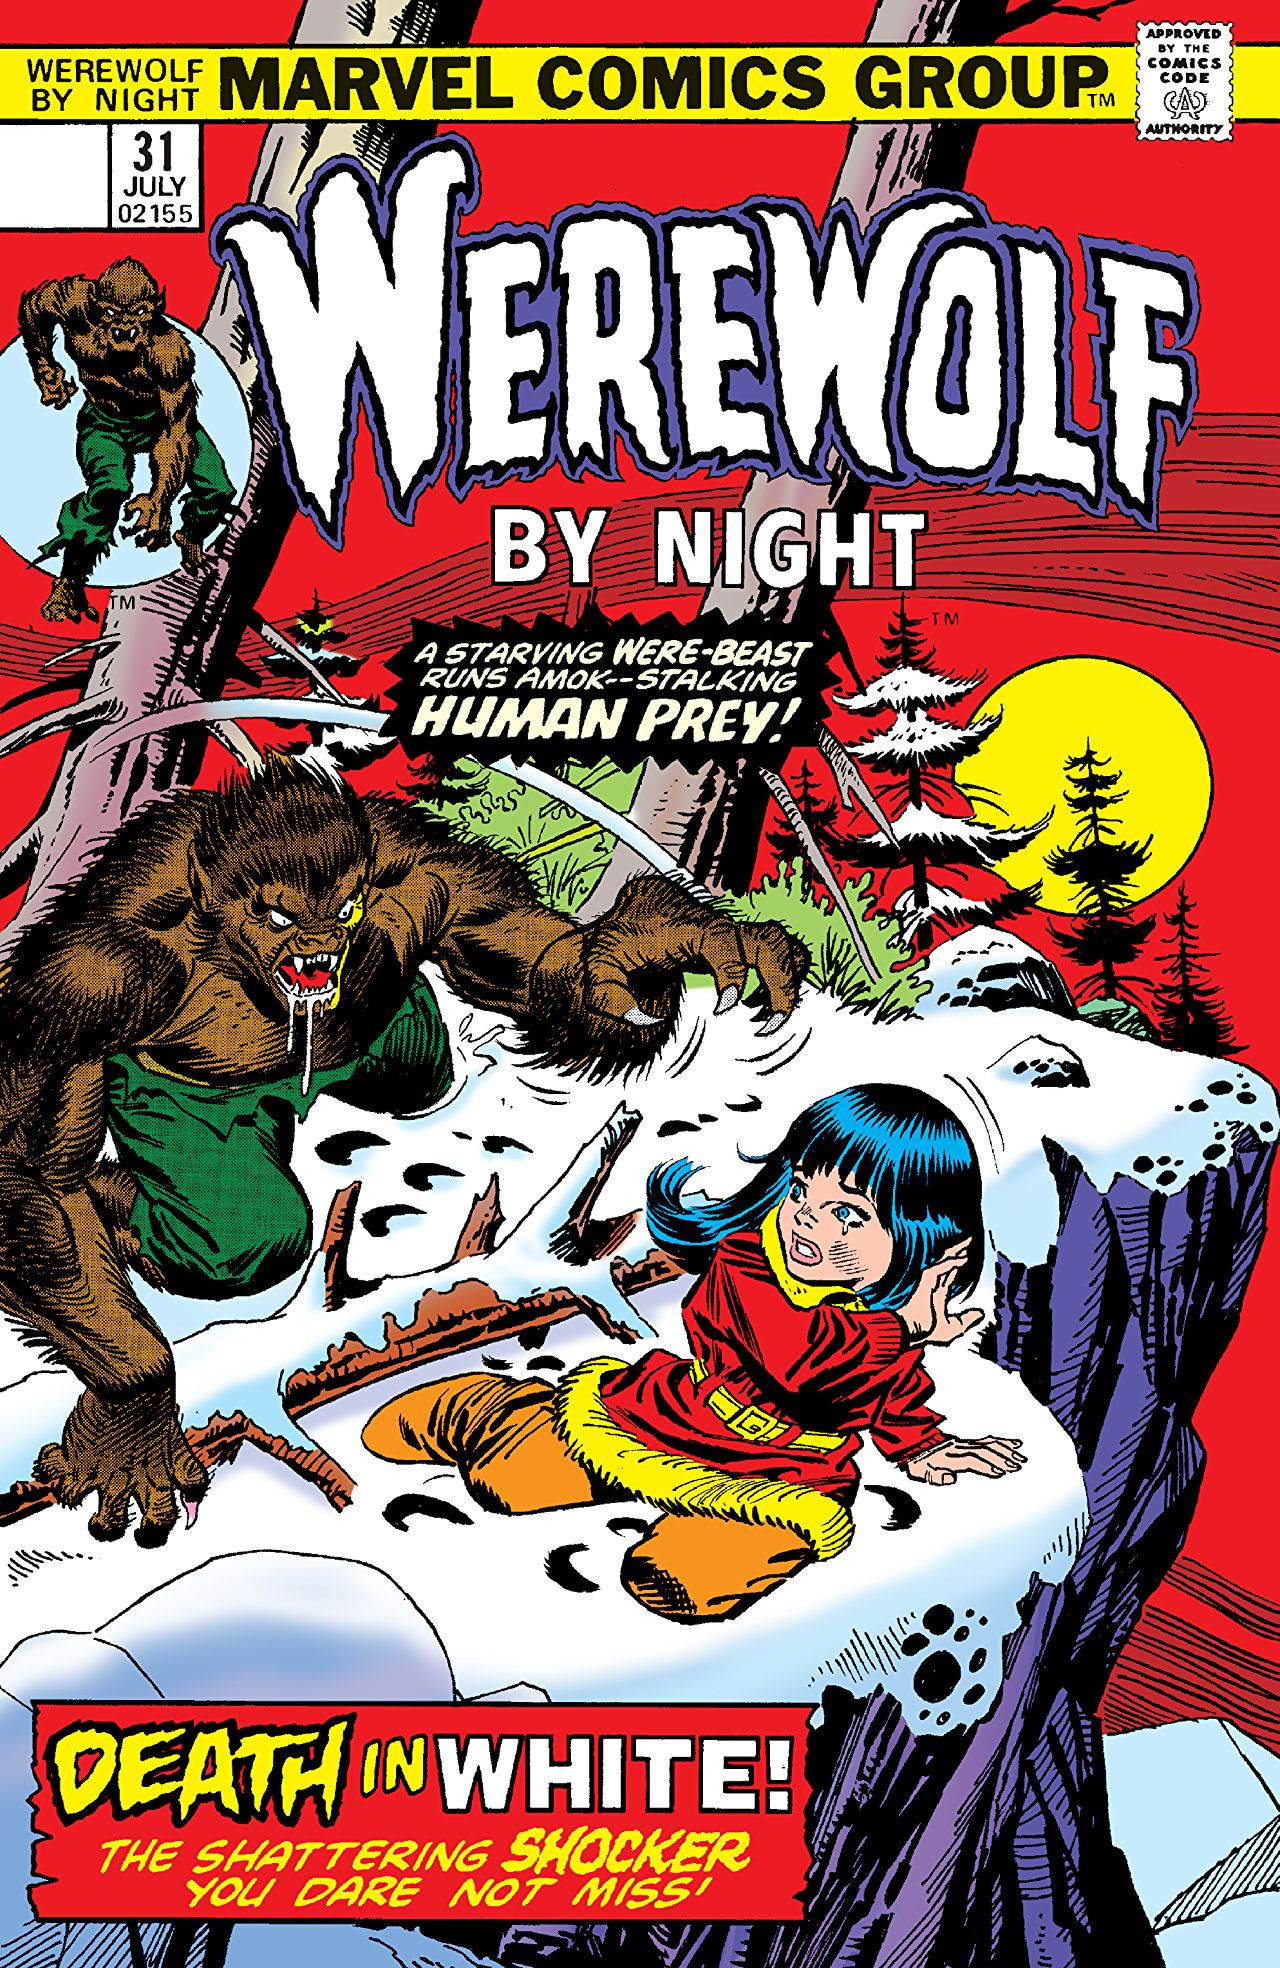 Werewolf by Night Vol 1 31 - Marvel Comics Database